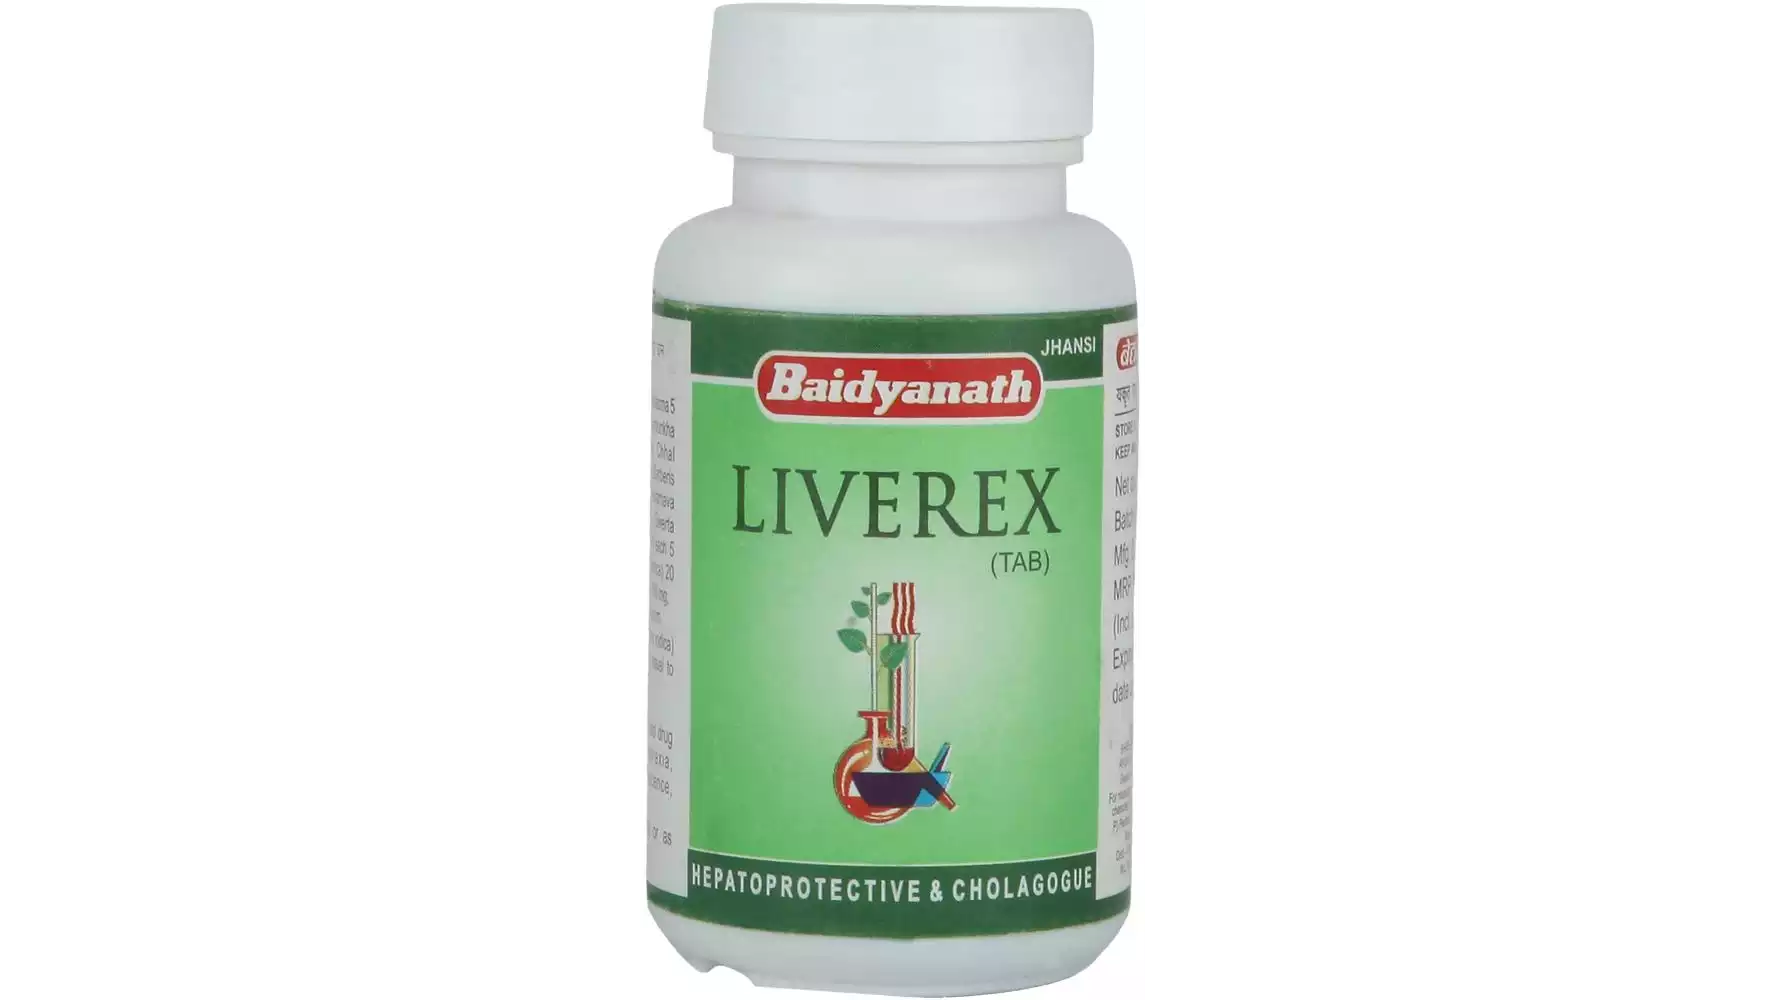 Baidyanath Liverex Tablet (100tab)